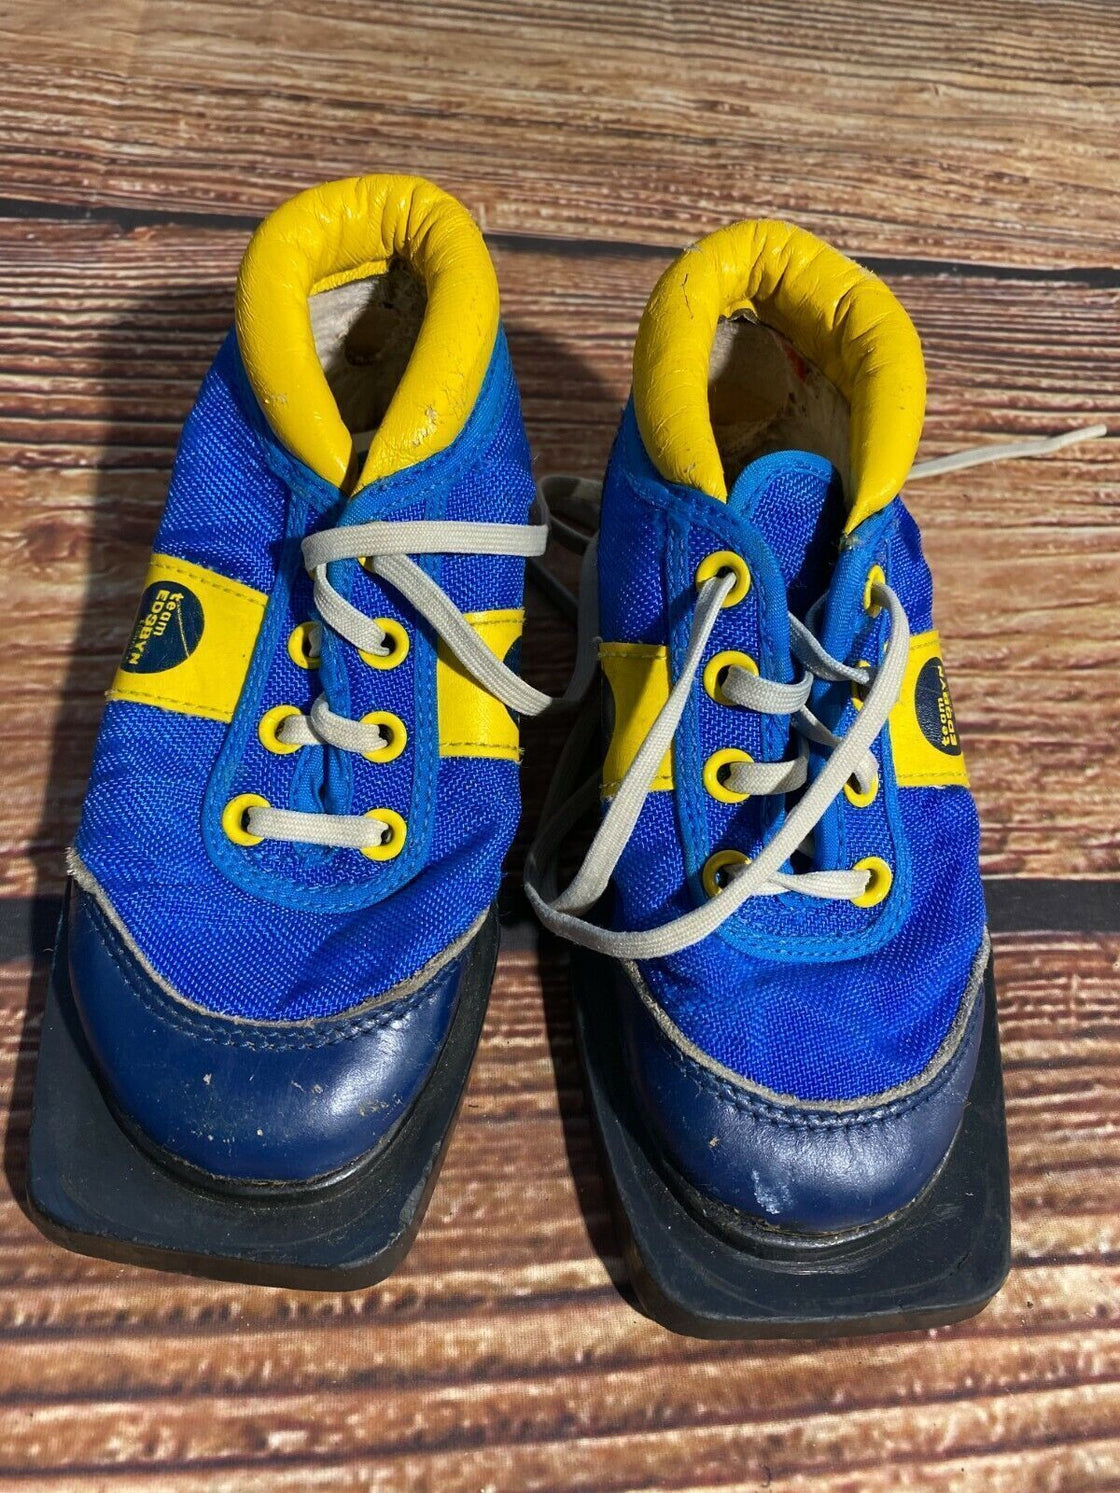 EDSBYN Nordic Cross Country Ski Boots Kids Size EU28 US10.5 NN 75mm